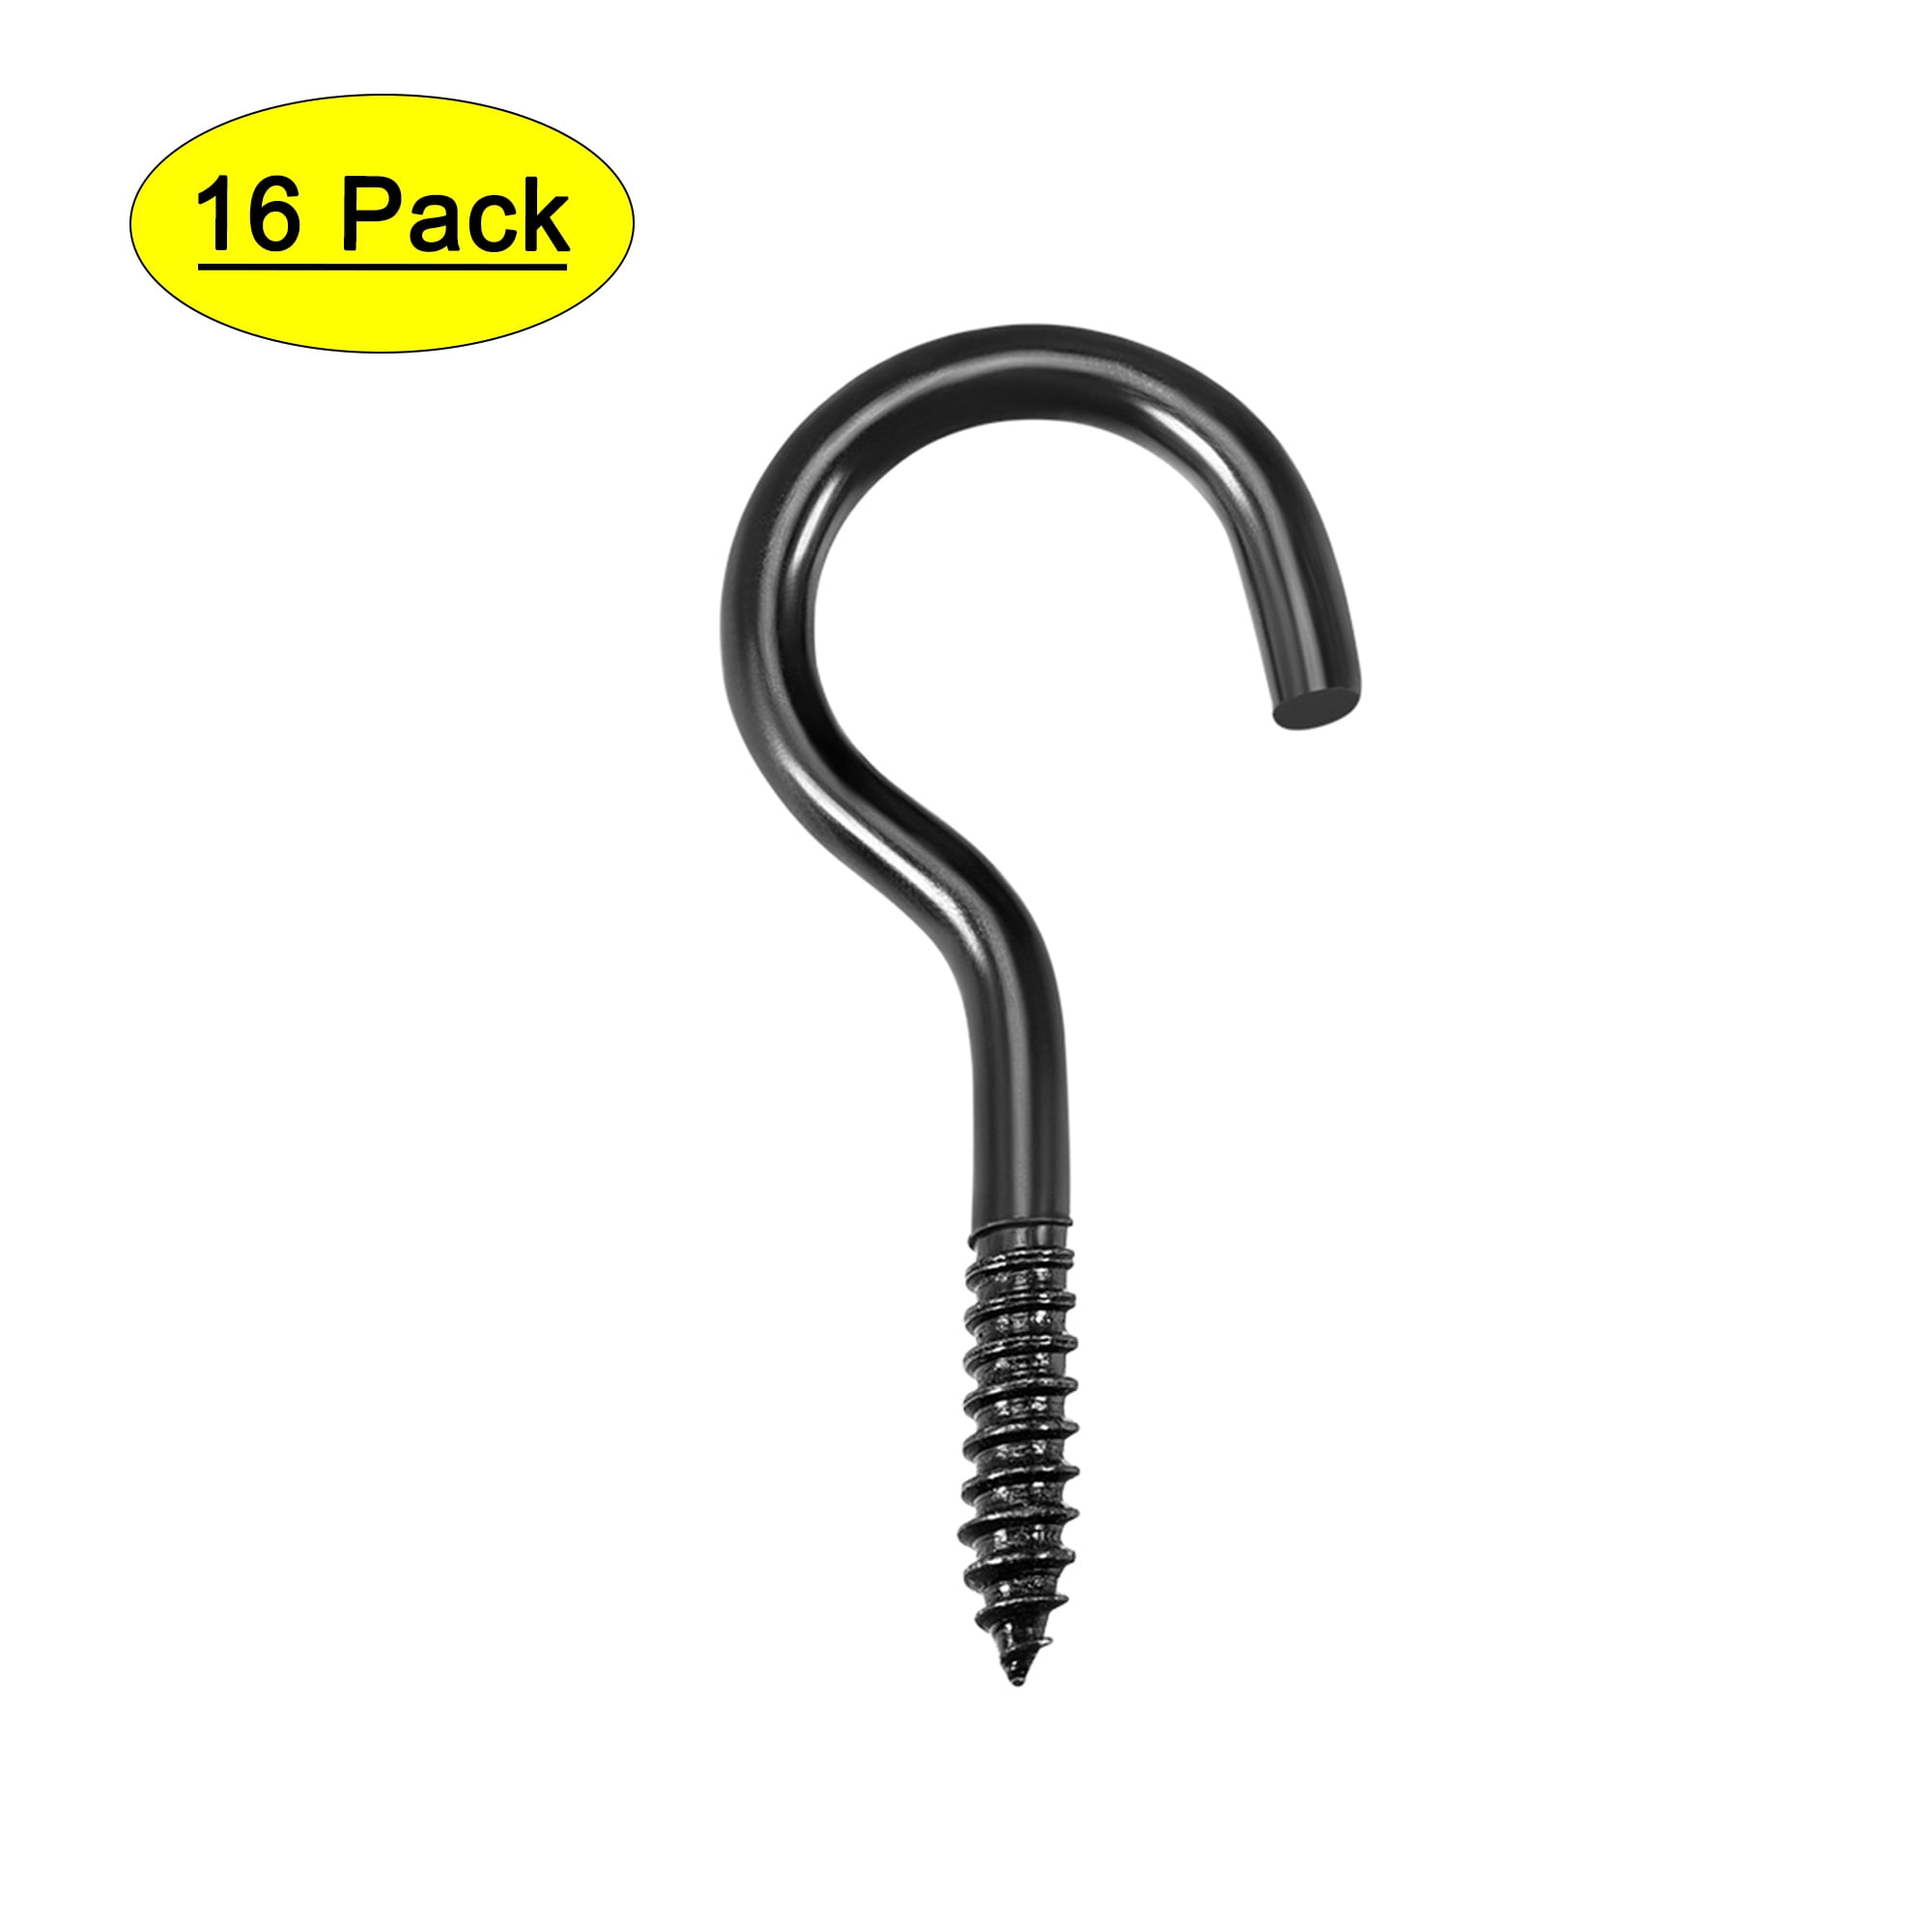 10 Pcs Screw Eye Hooks Black,10# Self Tapping Screws Eye-Shape Ring Hooks Suitable for Outdoor Applications